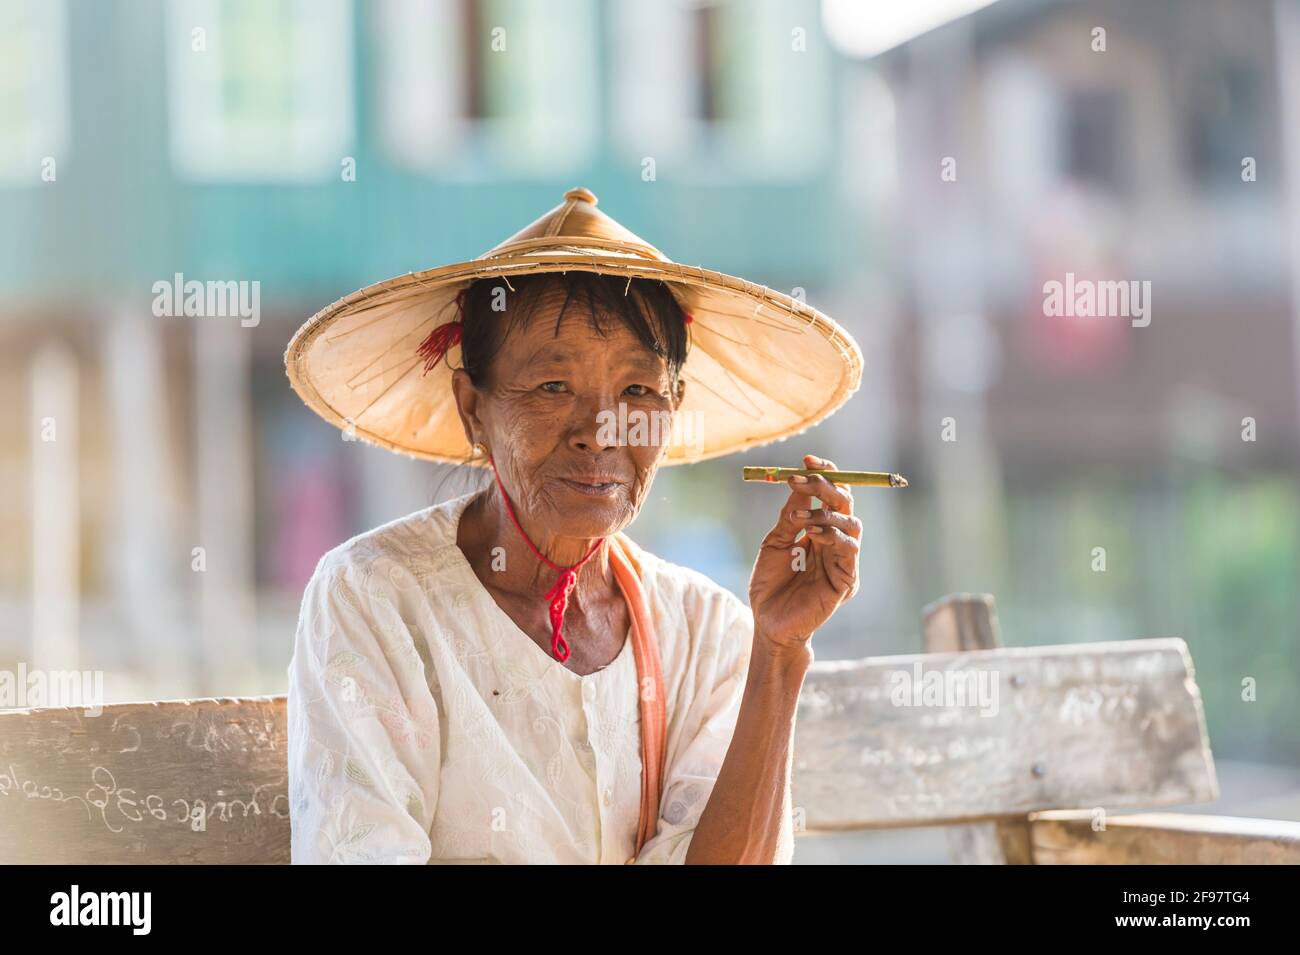 Myanmar, scenes at Inle Lake, in the pagoda forest Kakku, senior citizen, hat, cigarette, Stock Photo